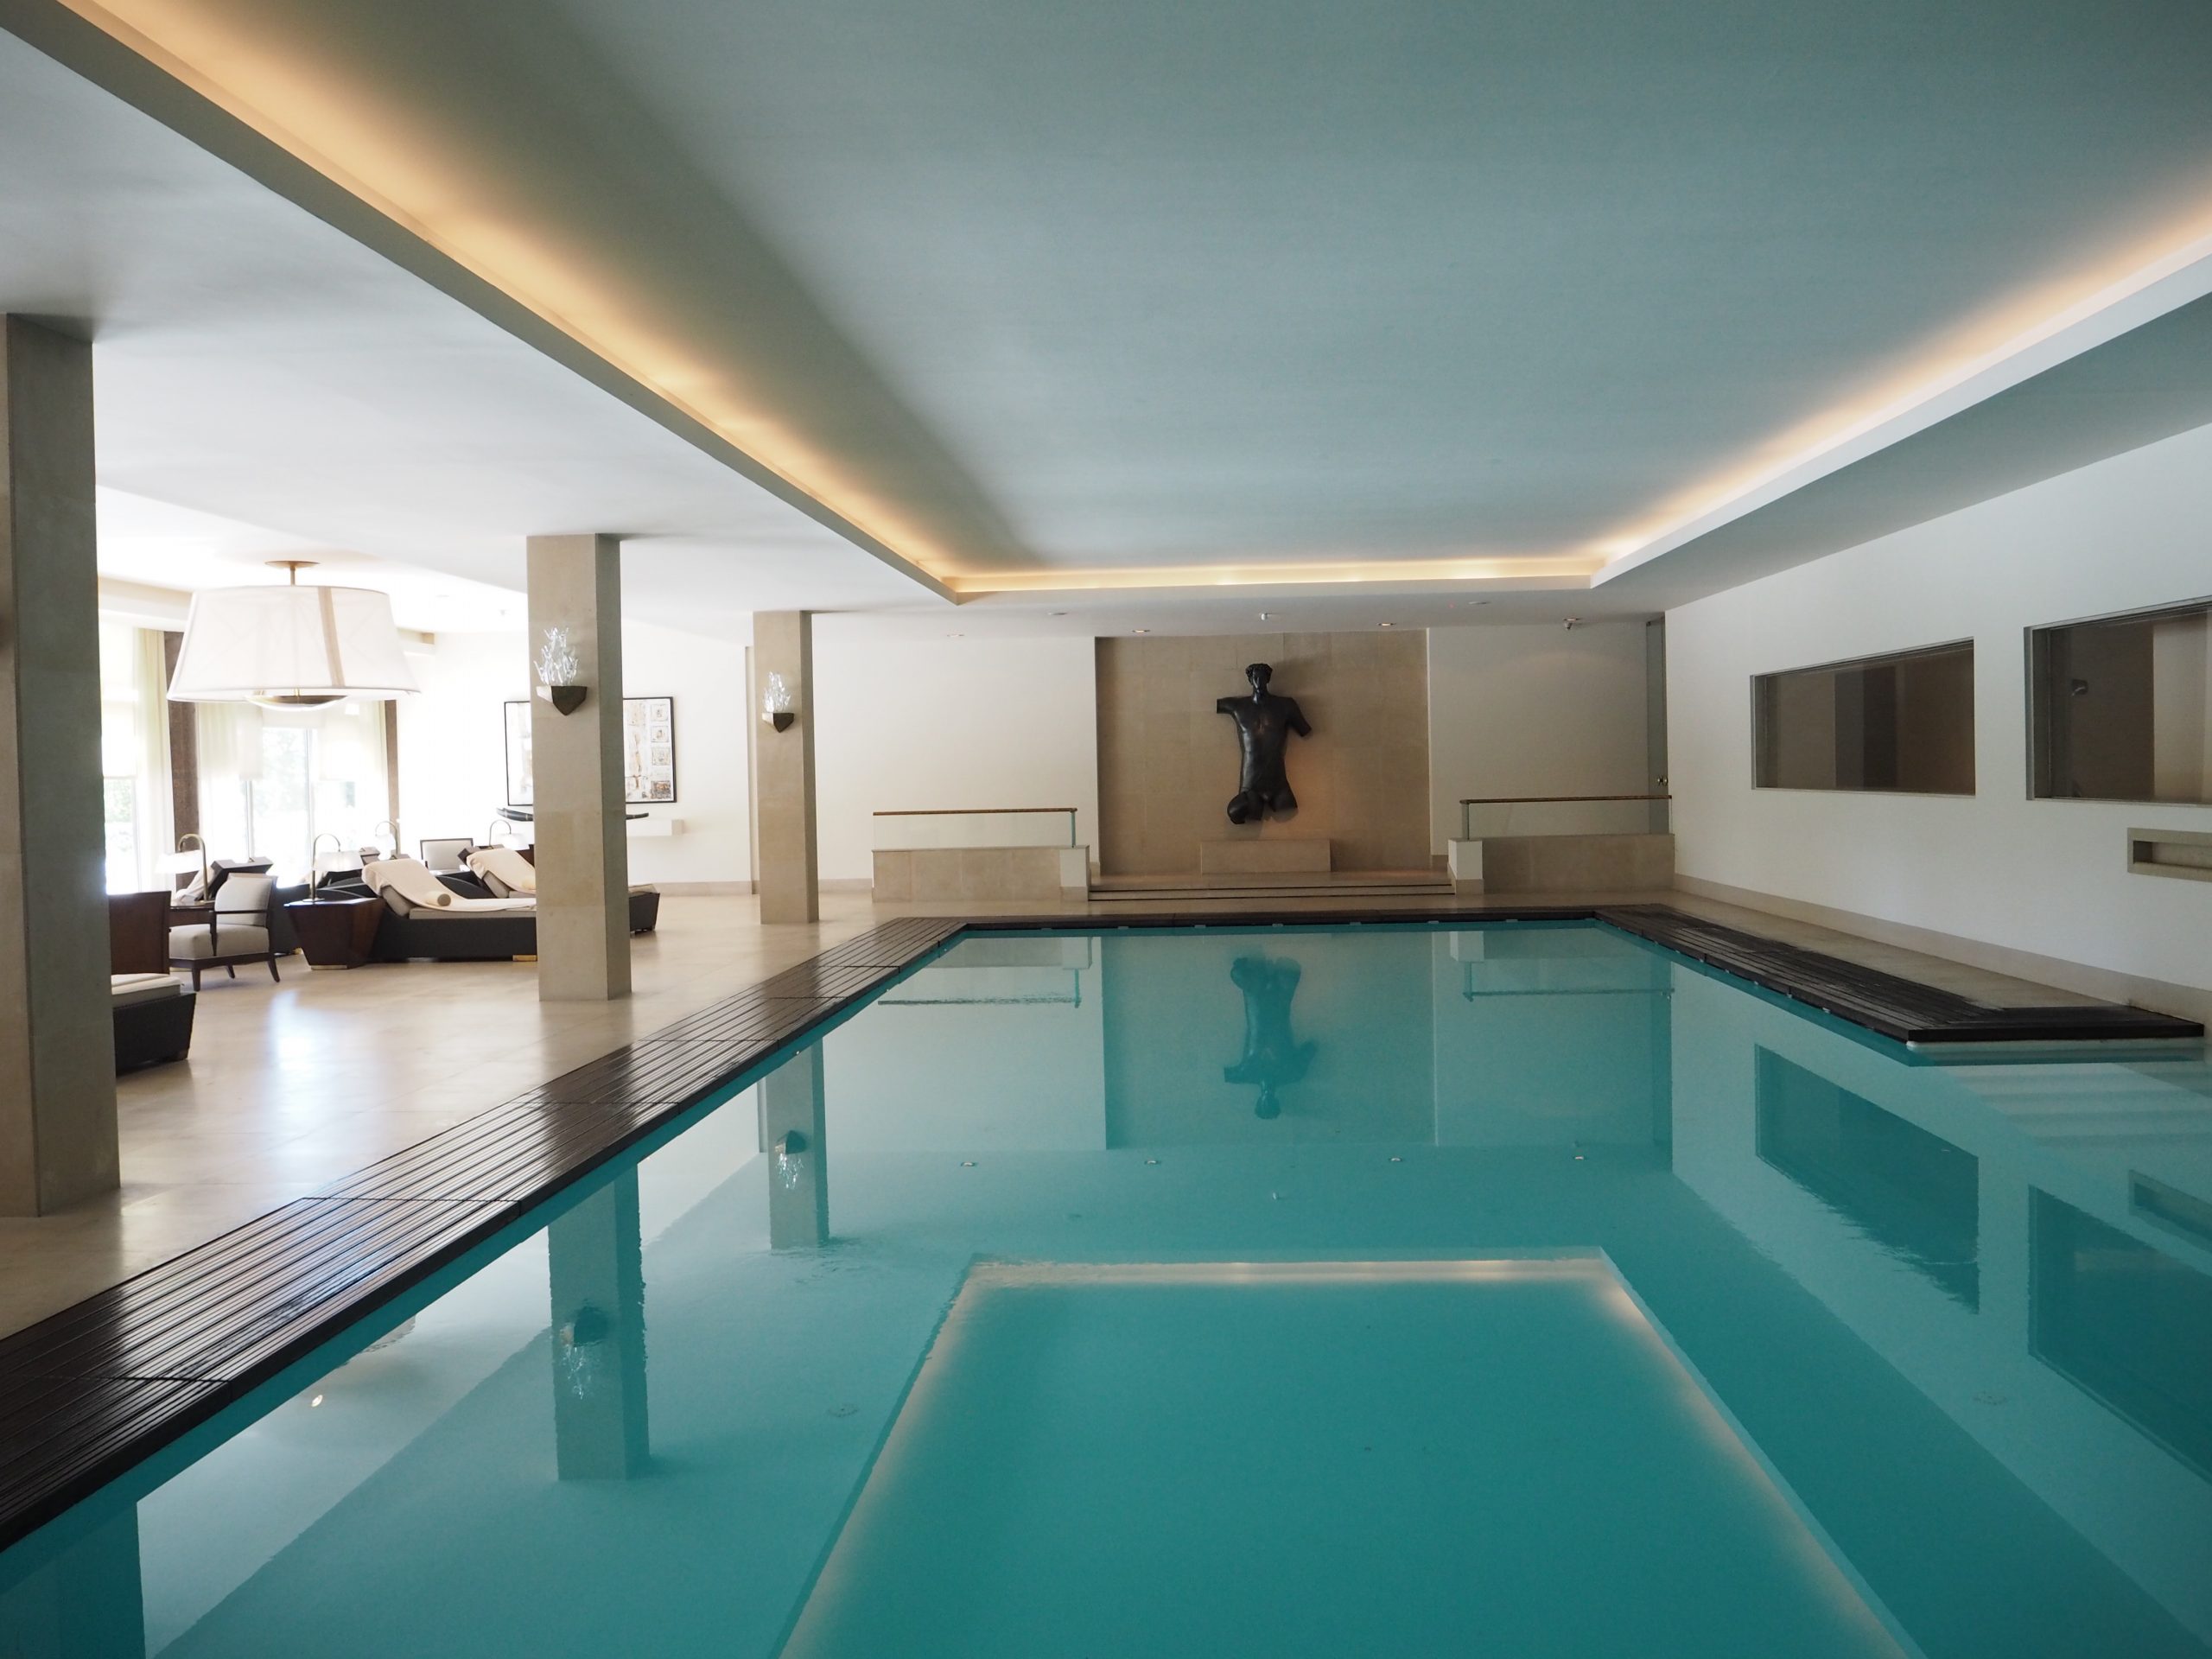 Four Seasons Hotel Ritz pool